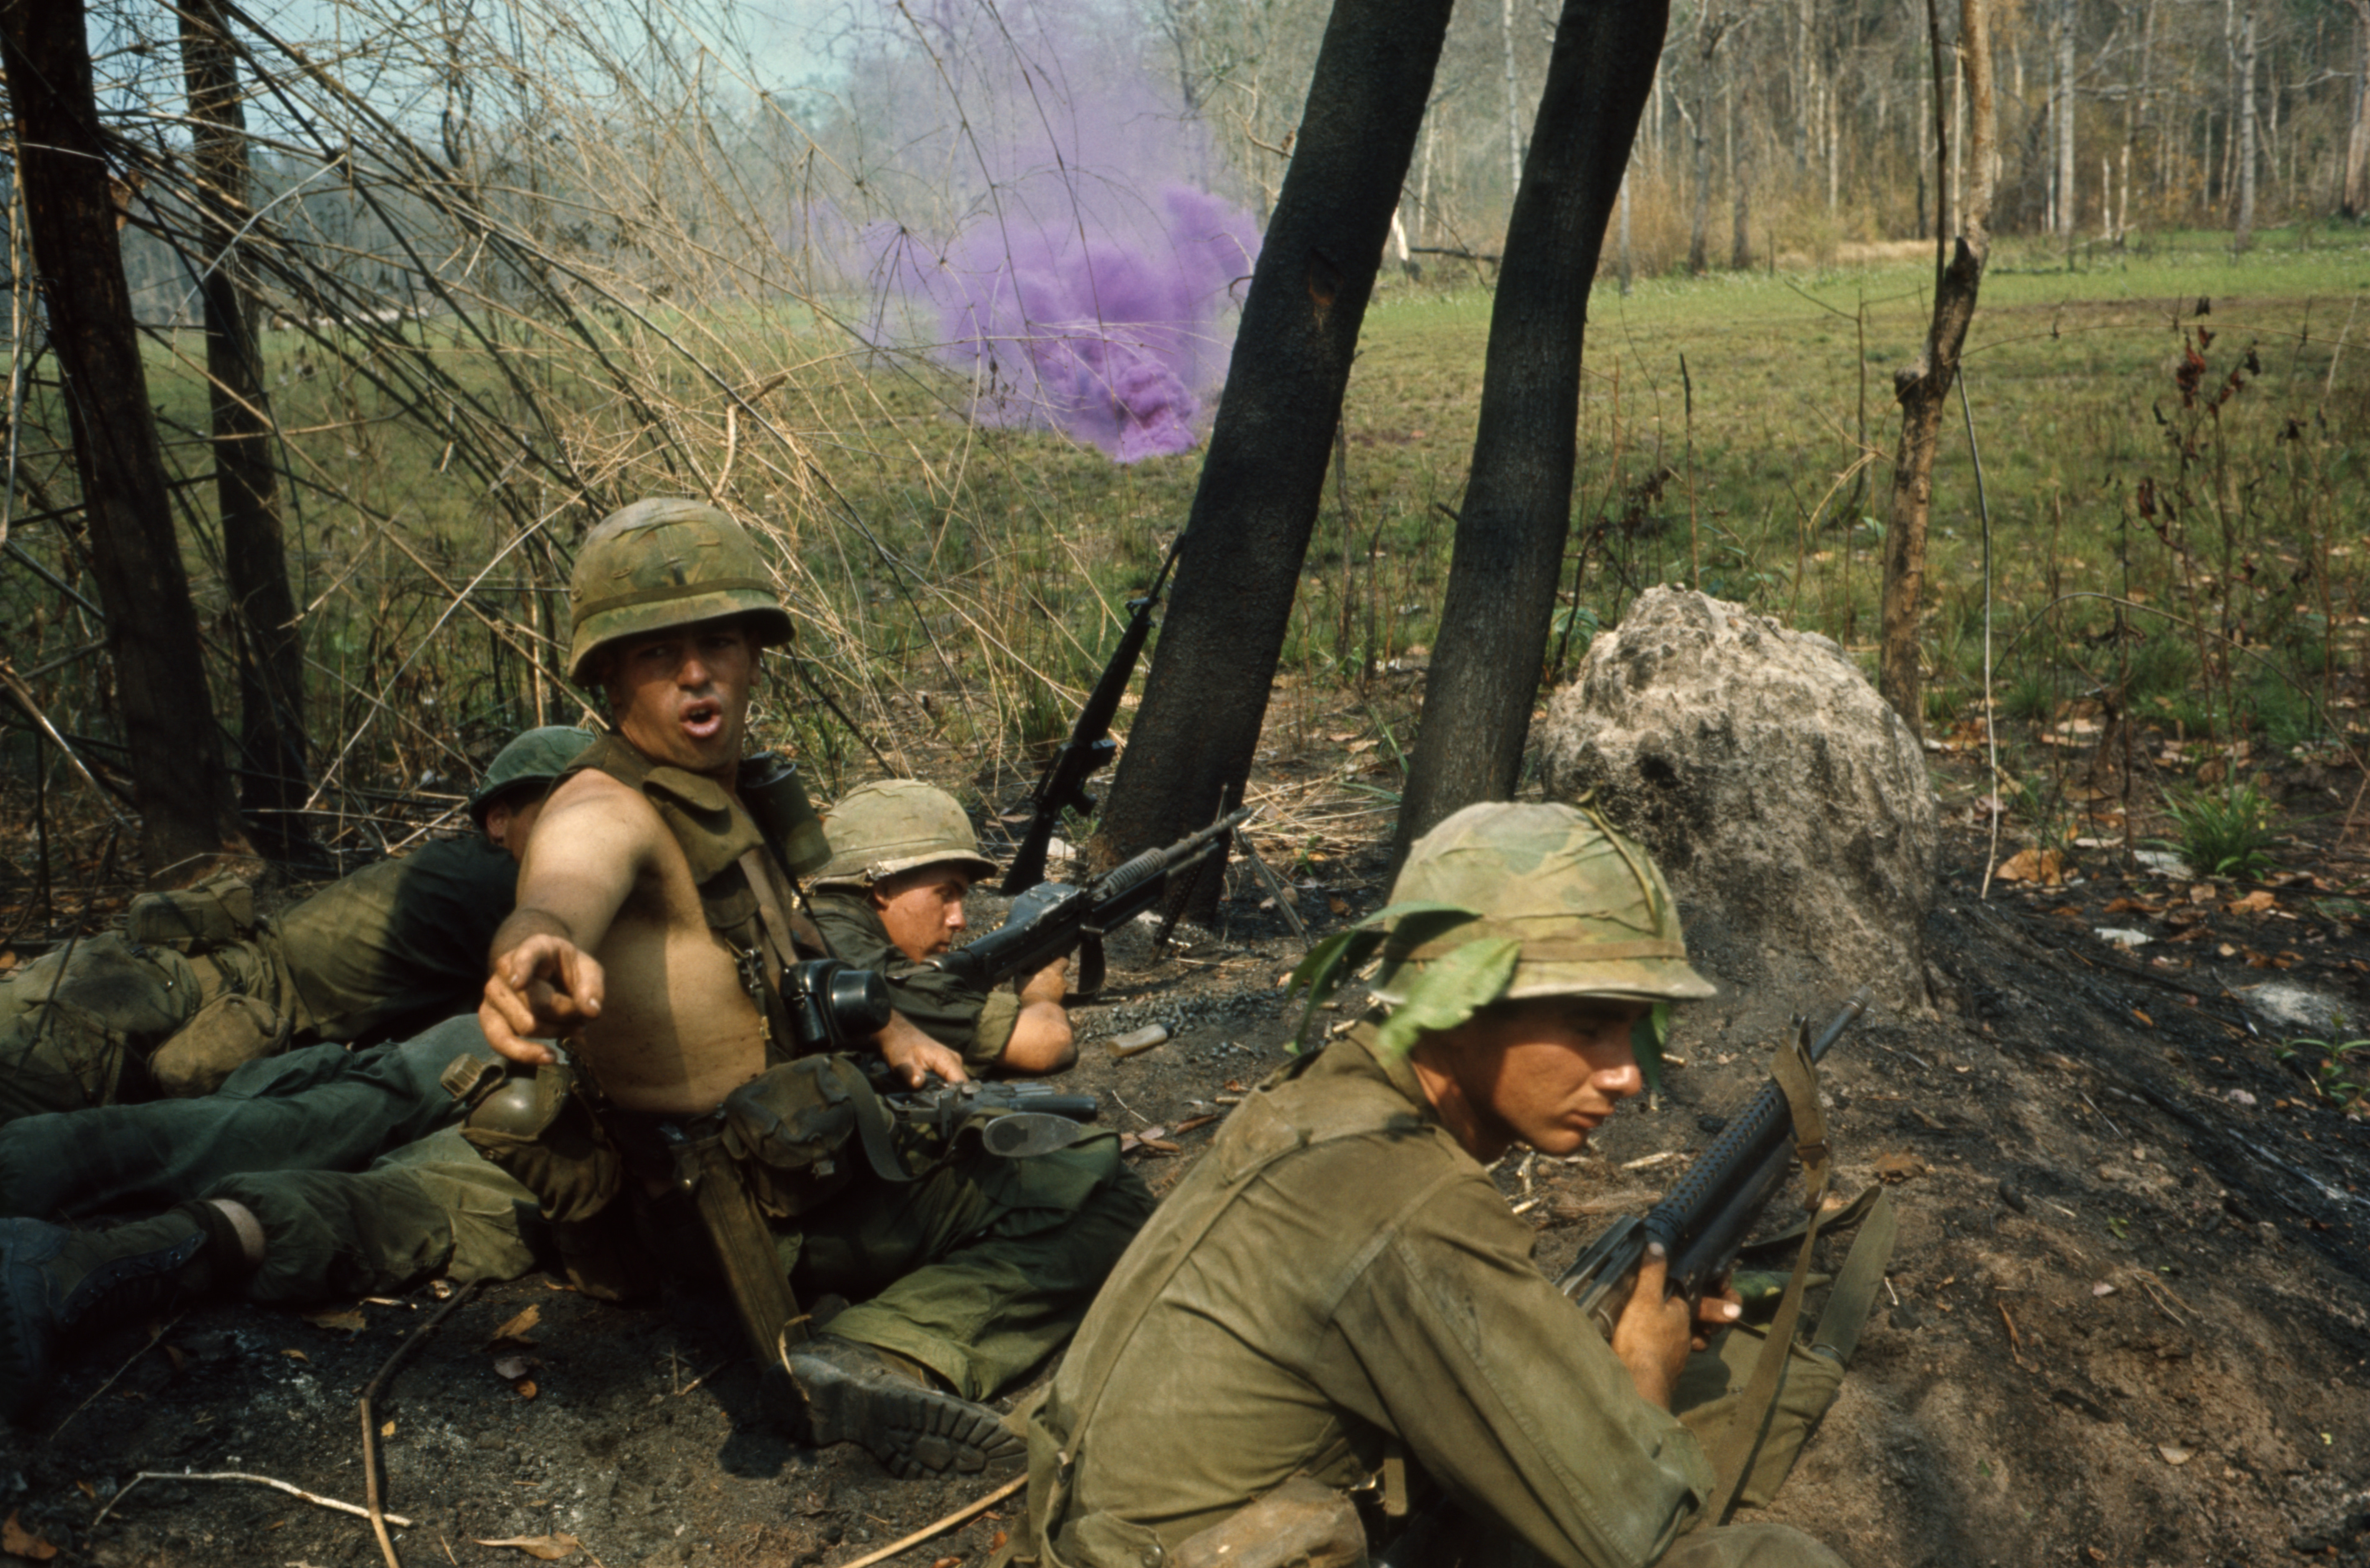 vietnam war in hd